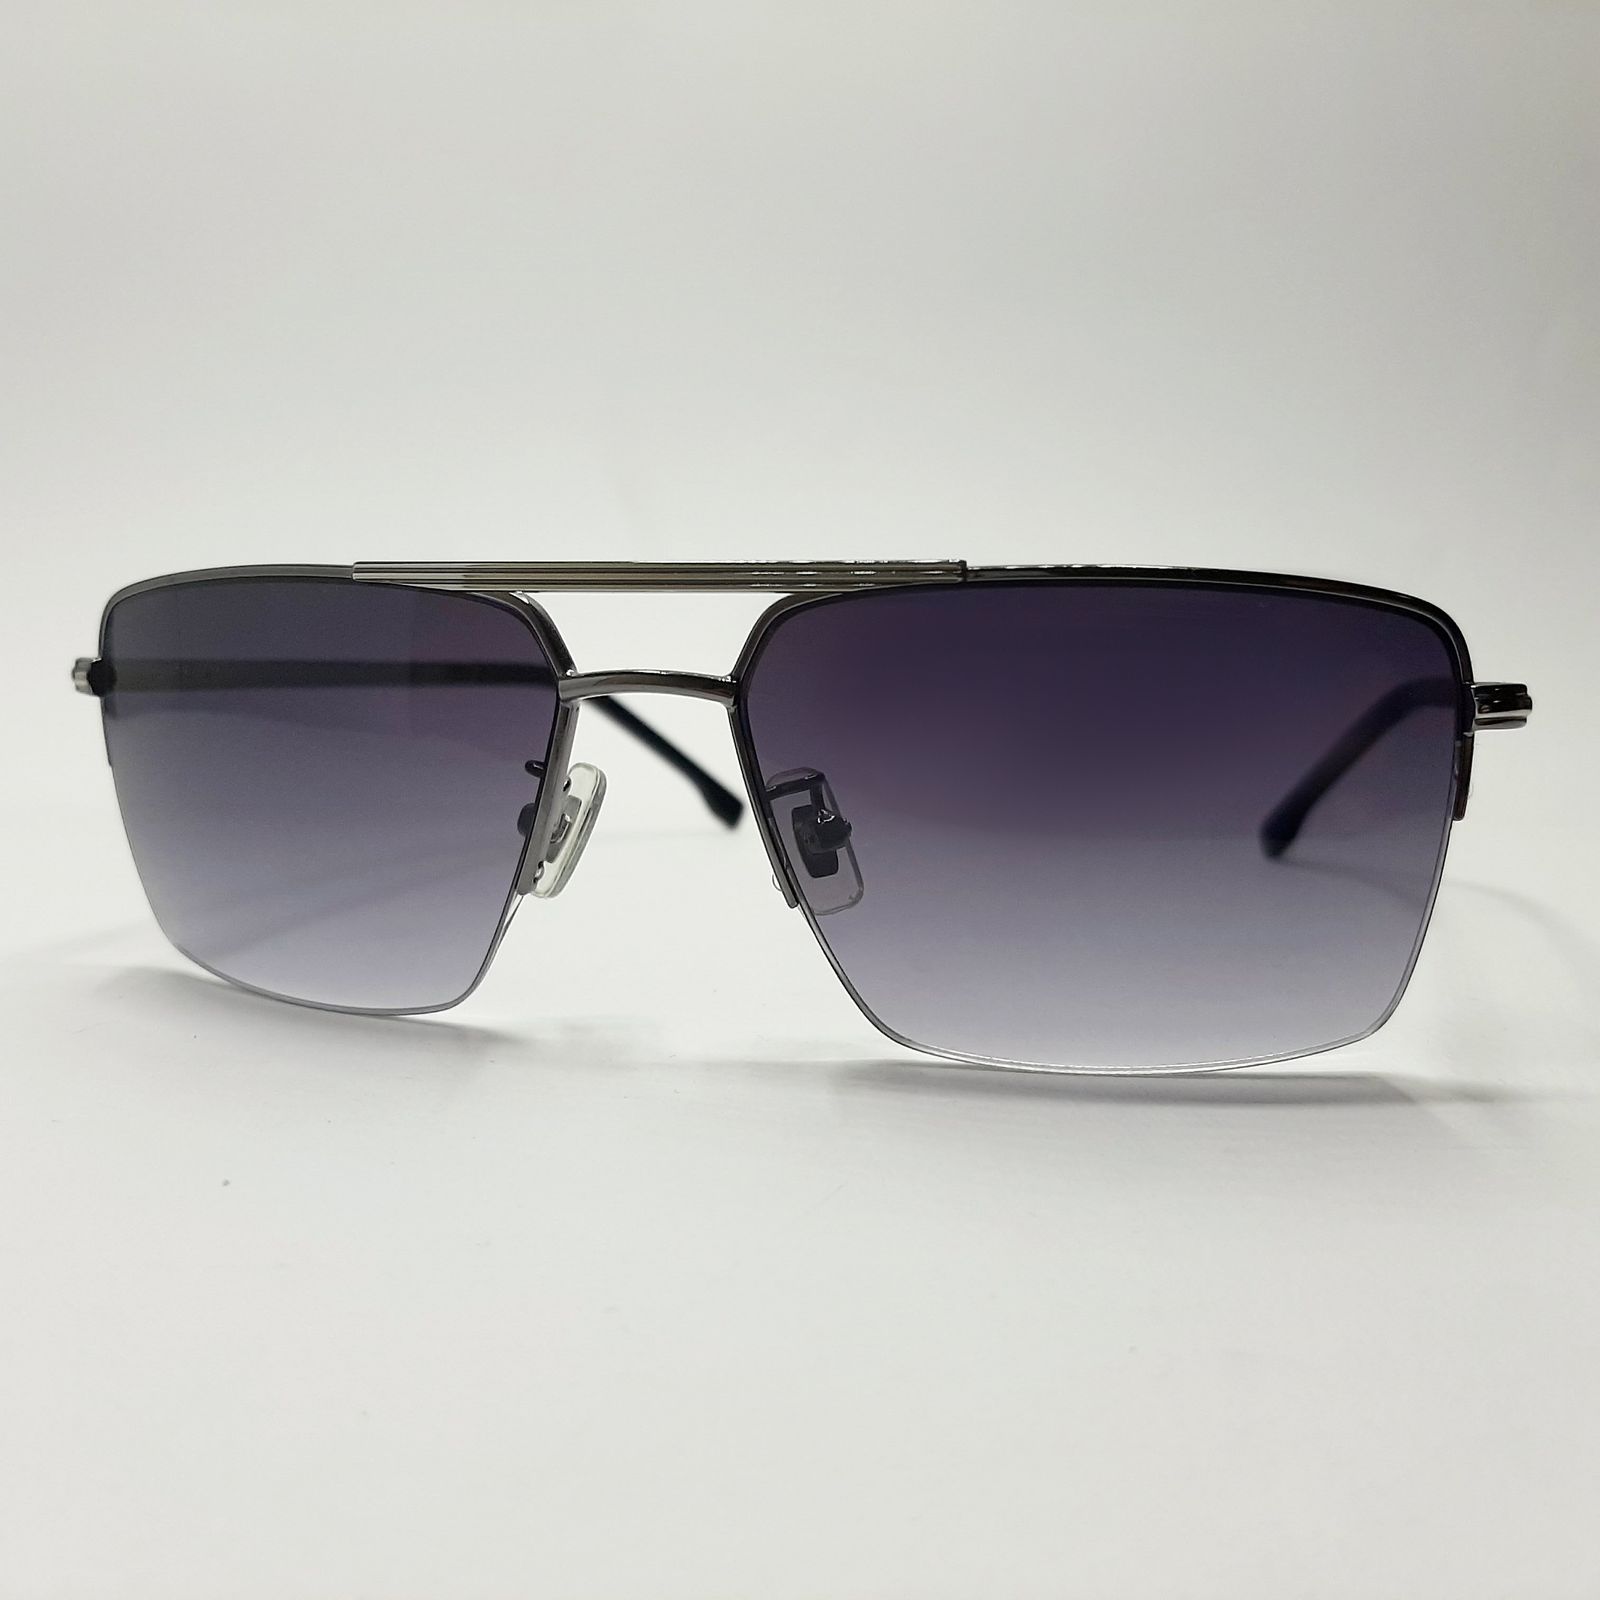 عینک آفتابی مارک جکوبس مدل HB1070c3 -  - 2